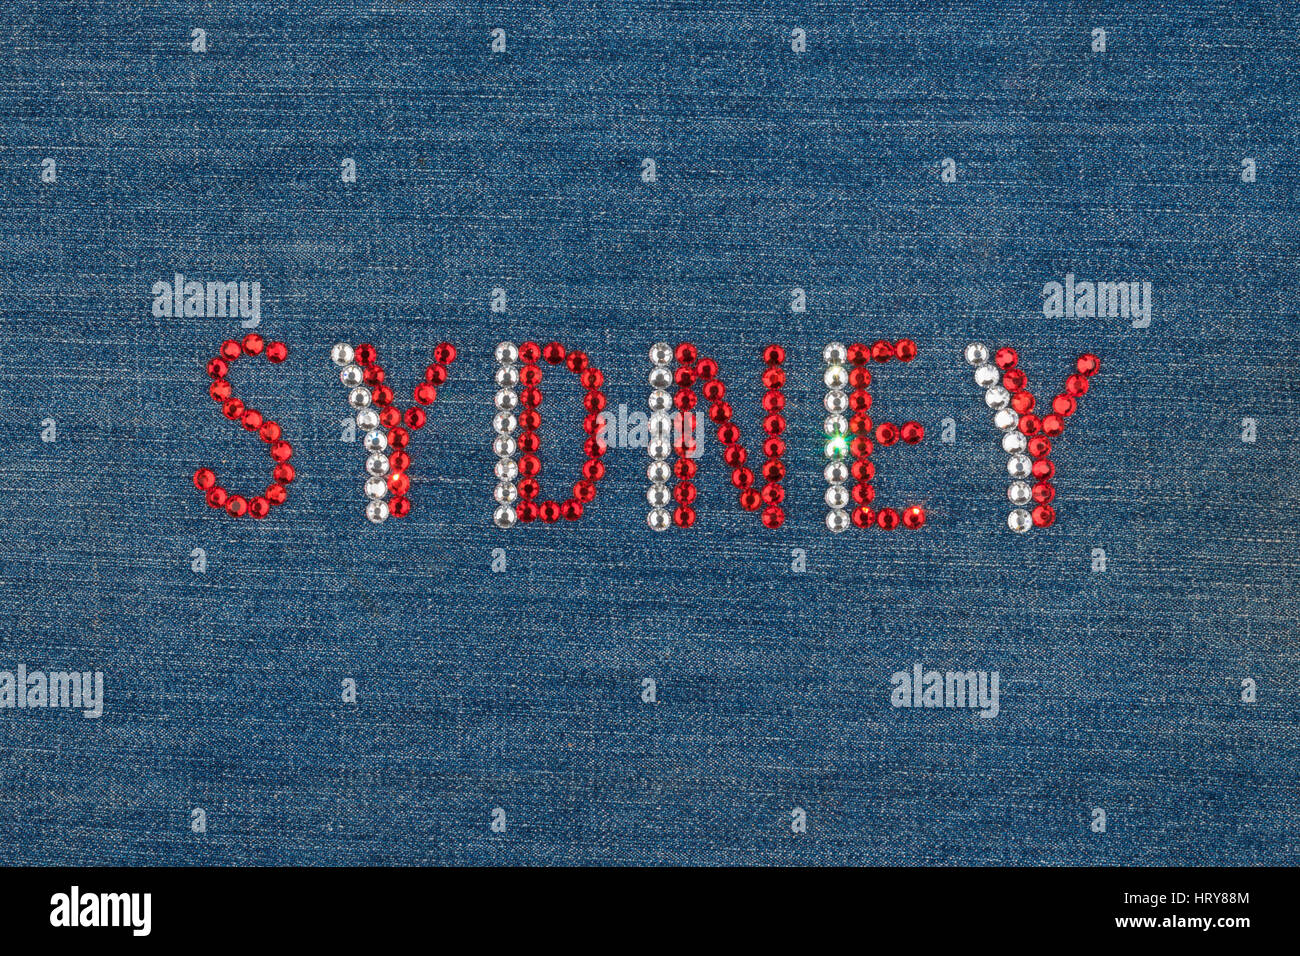 Inscription Sydney, inlaid rhinestones on denim. View from above Stock Photo